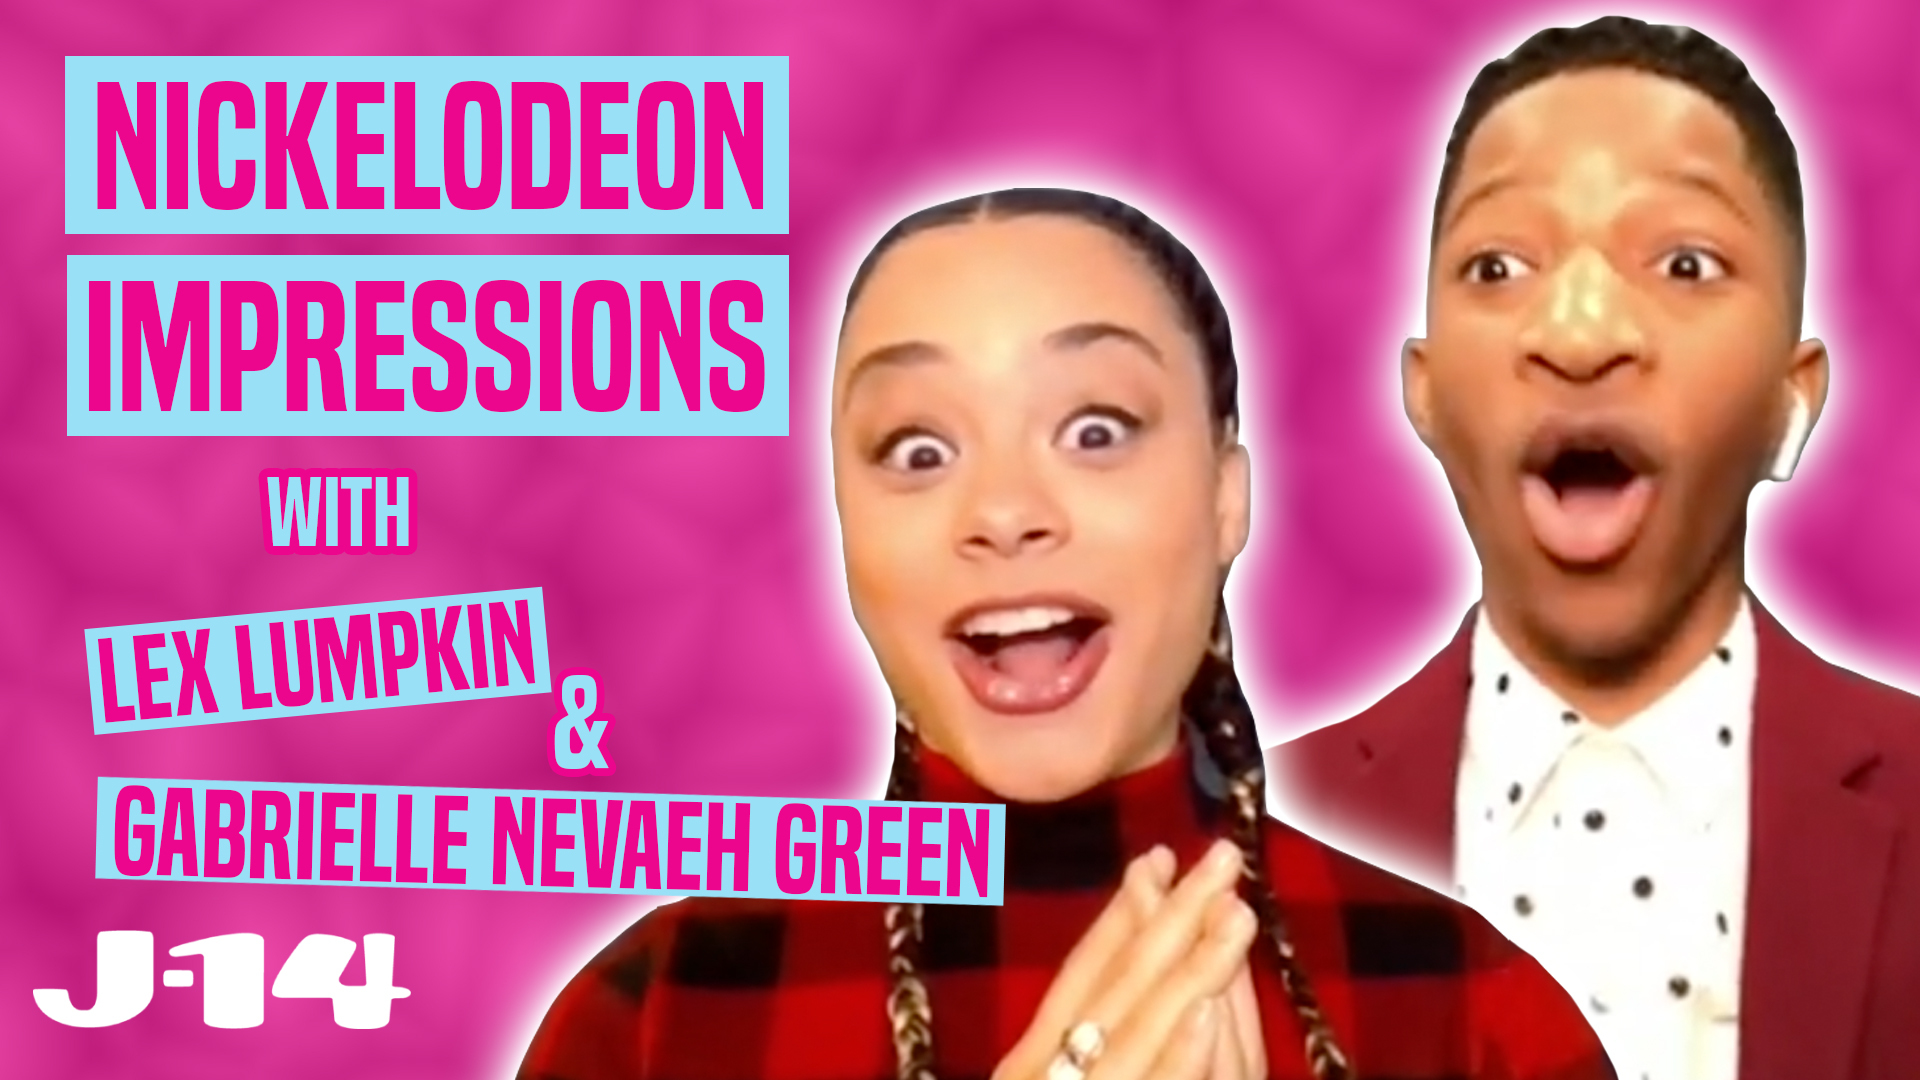 Lex Lumpkin Gabrielle Nevaeh Green Do Nickelodeon Impressions